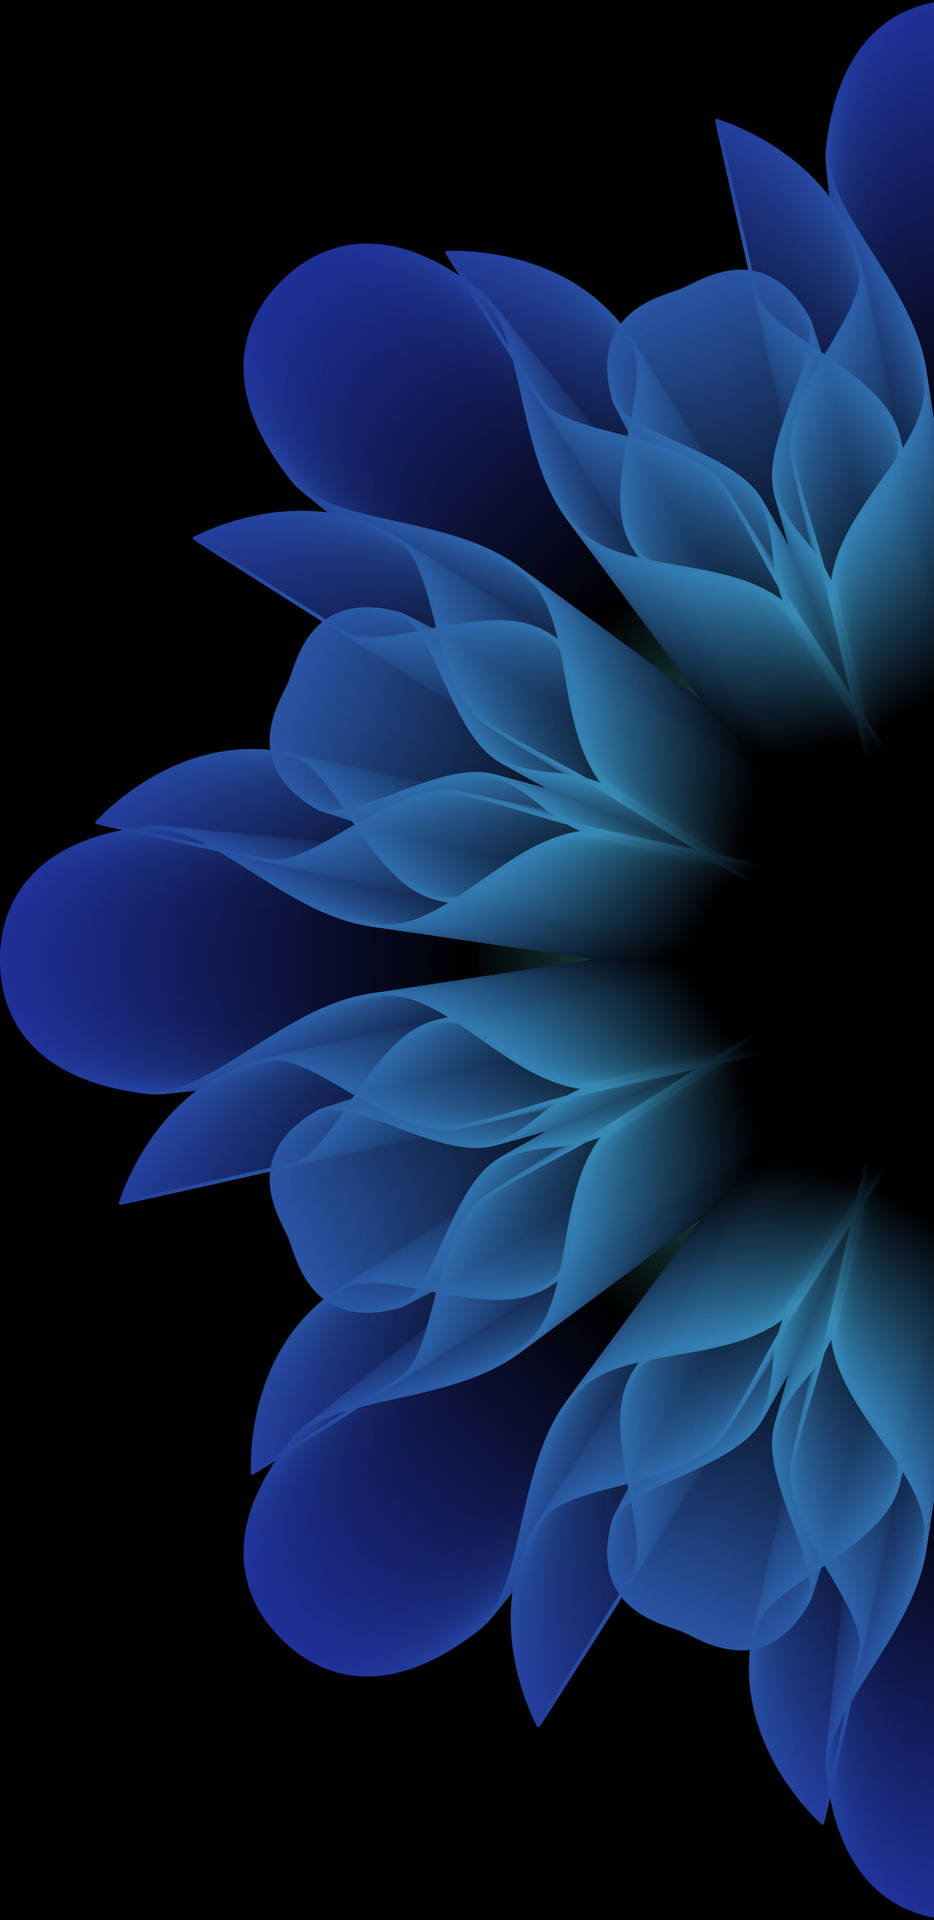 Glow In The Dark Flower Oled Phone Background